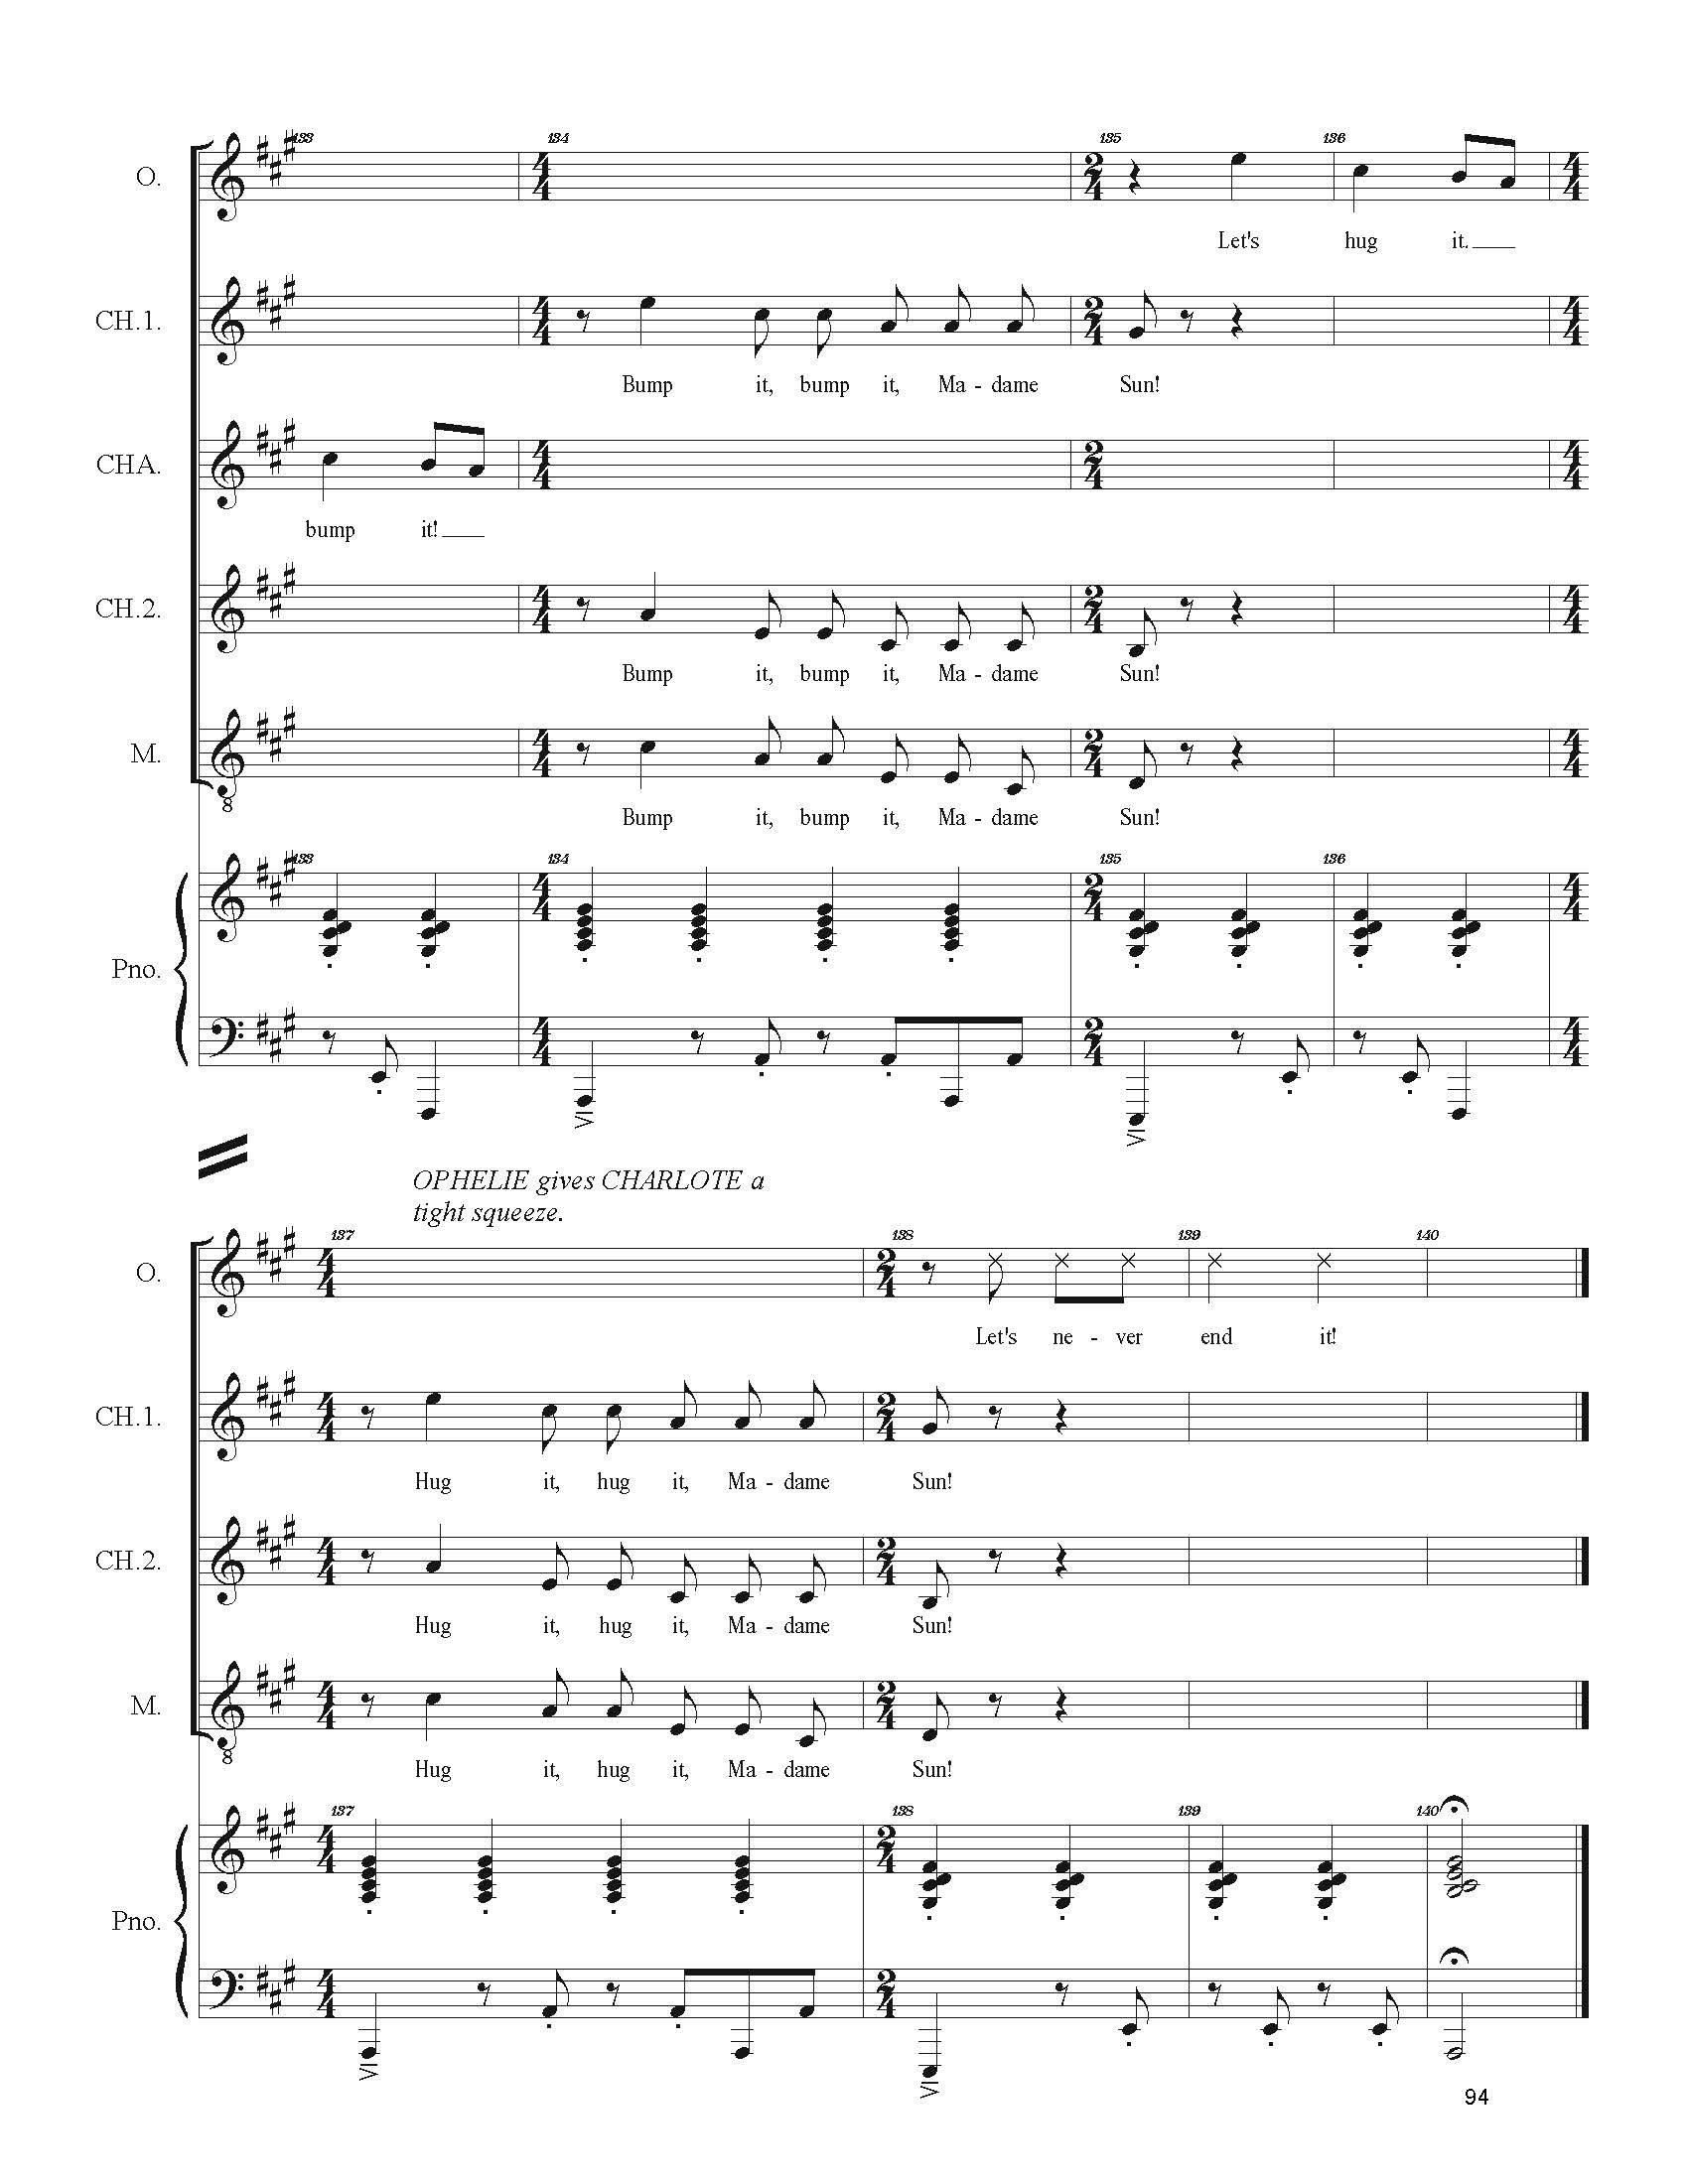 FULL PIANO VOCAL SCORE DRAFT 1 - Score_Page_094.jpg